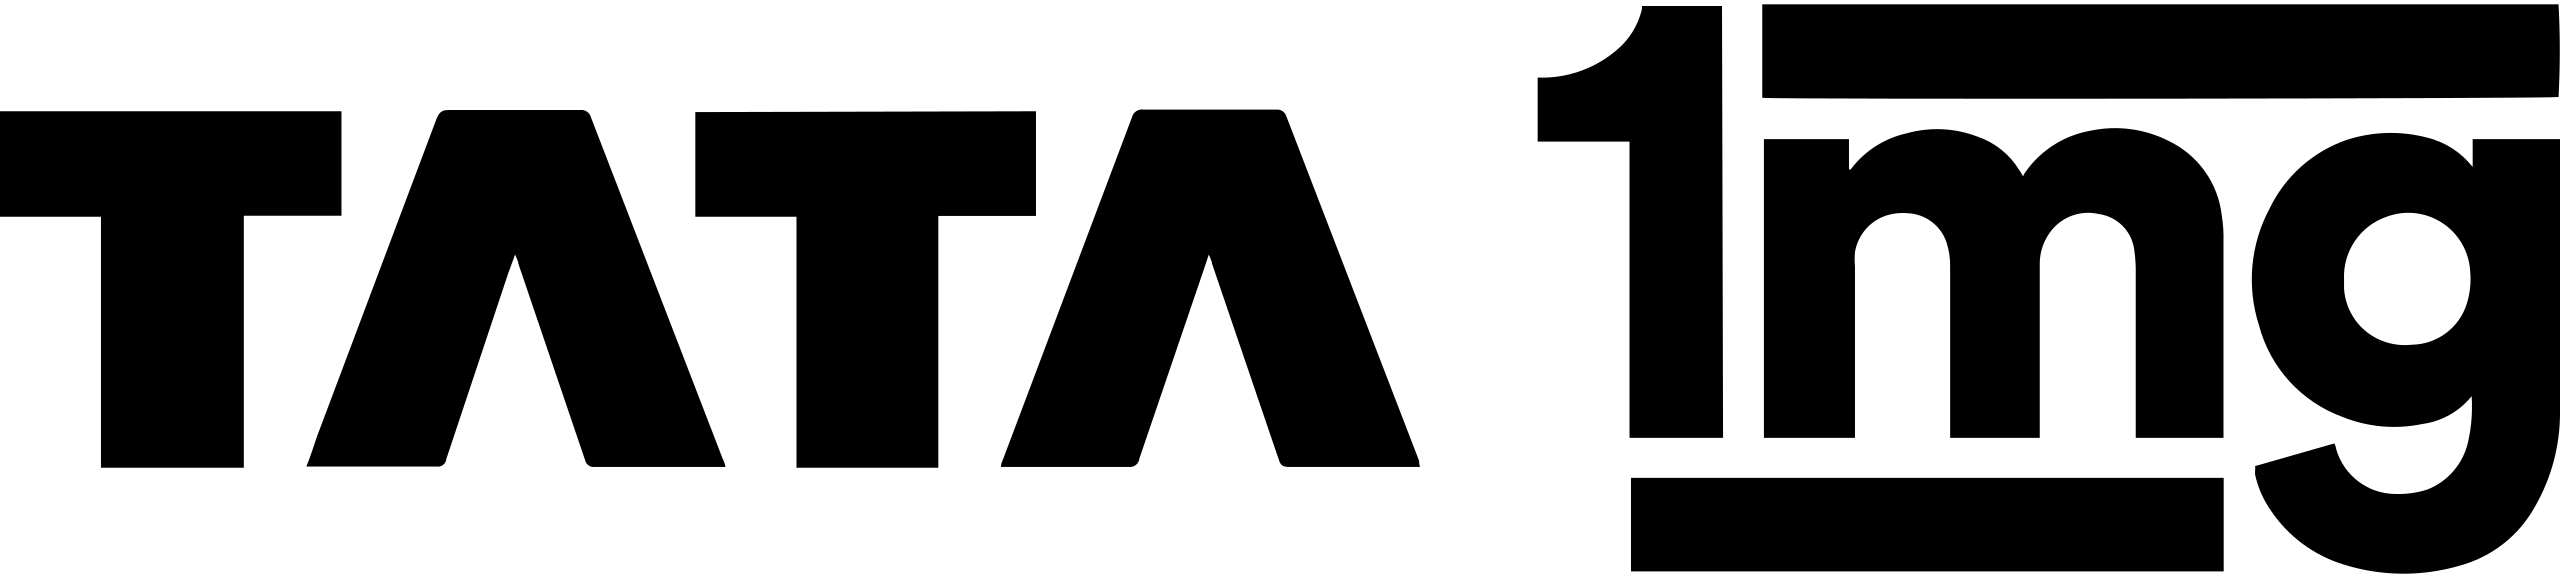 TATA_1mg_Logo.svg